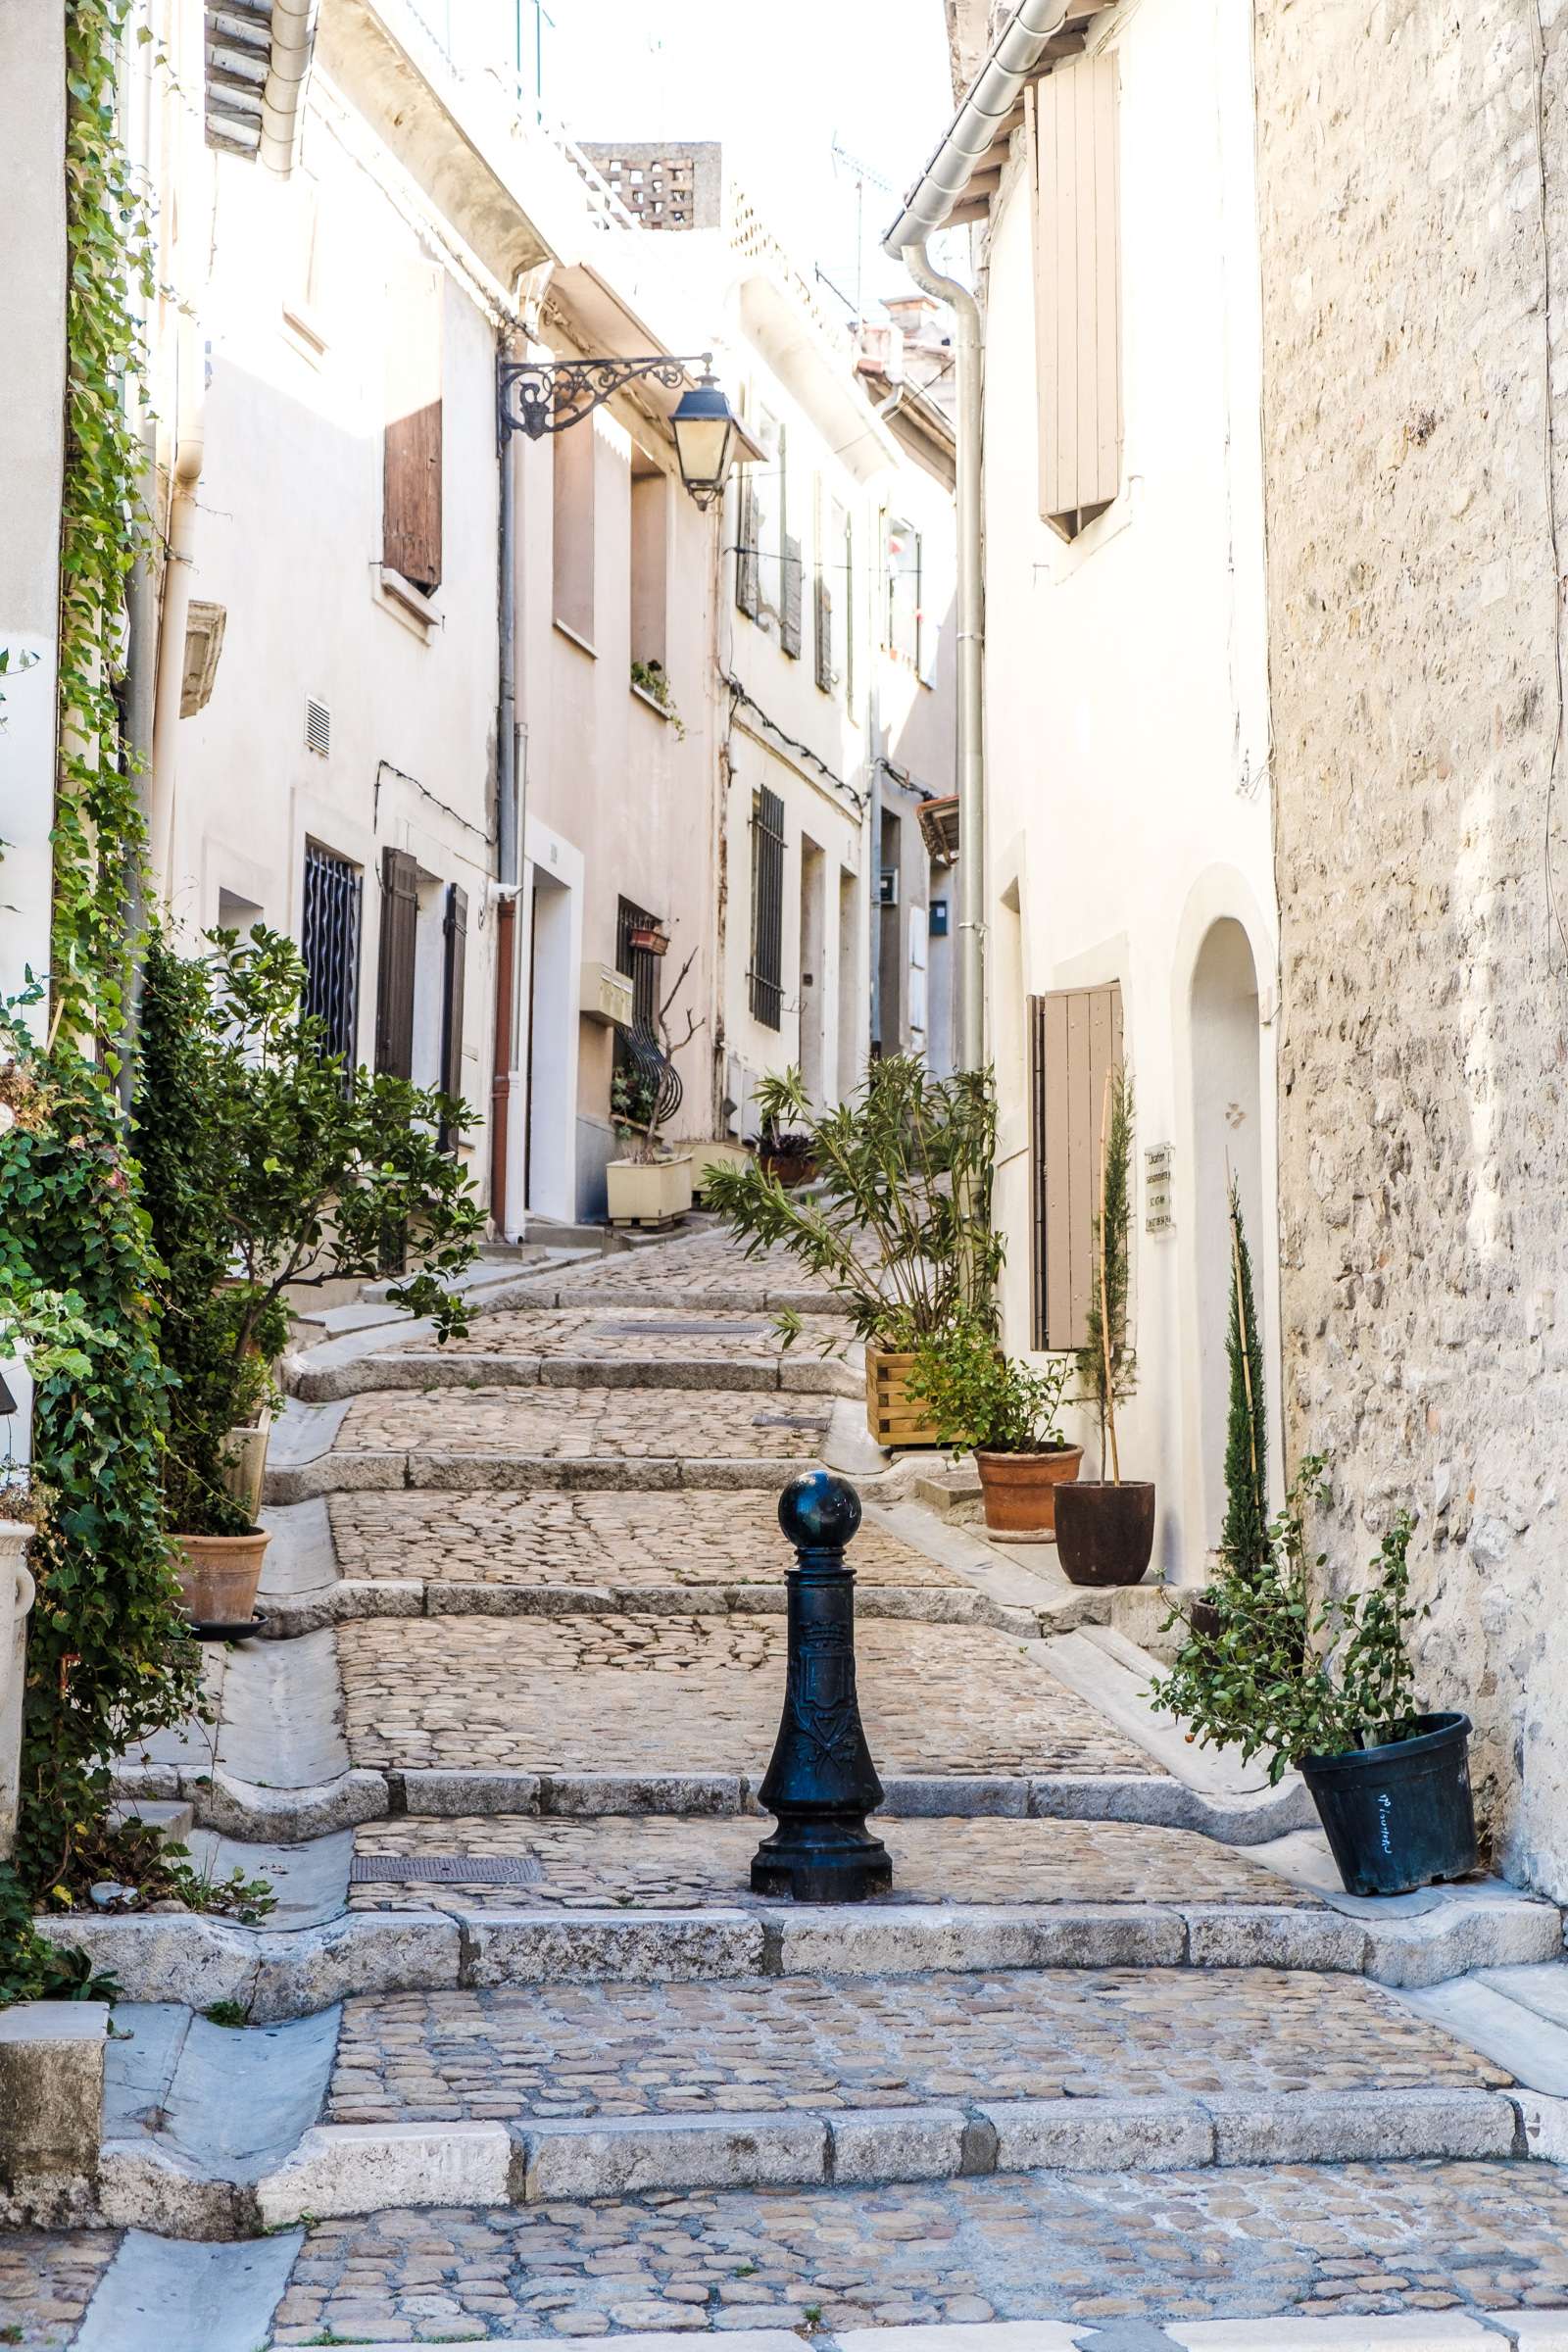 Winding cobbled street in Arles